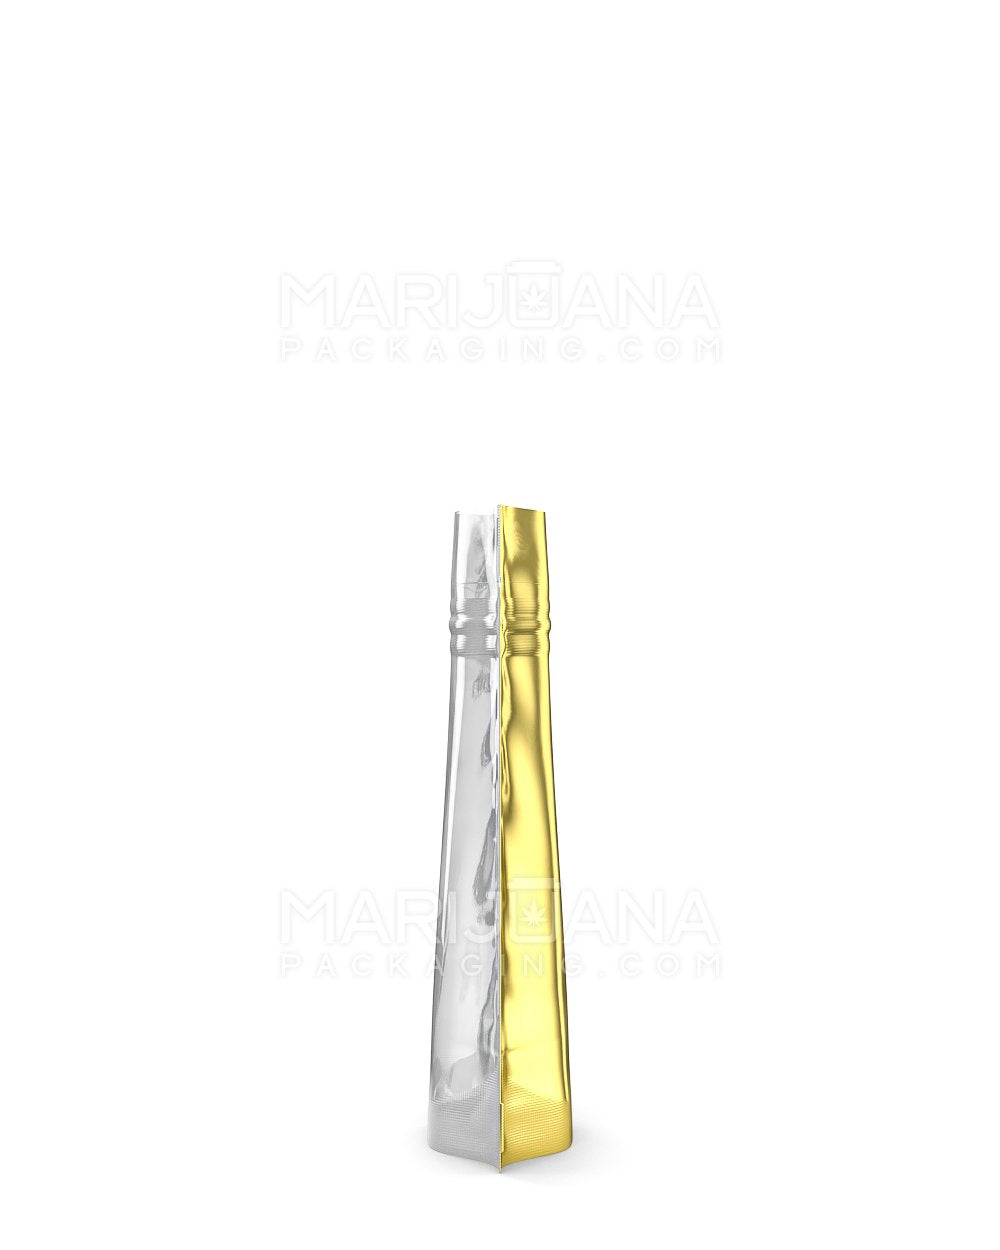 Tamper Evident | Glossy Gold Vista Mylar Bag | 3.6in x 5in - 3.5g - 1000 Count - 6